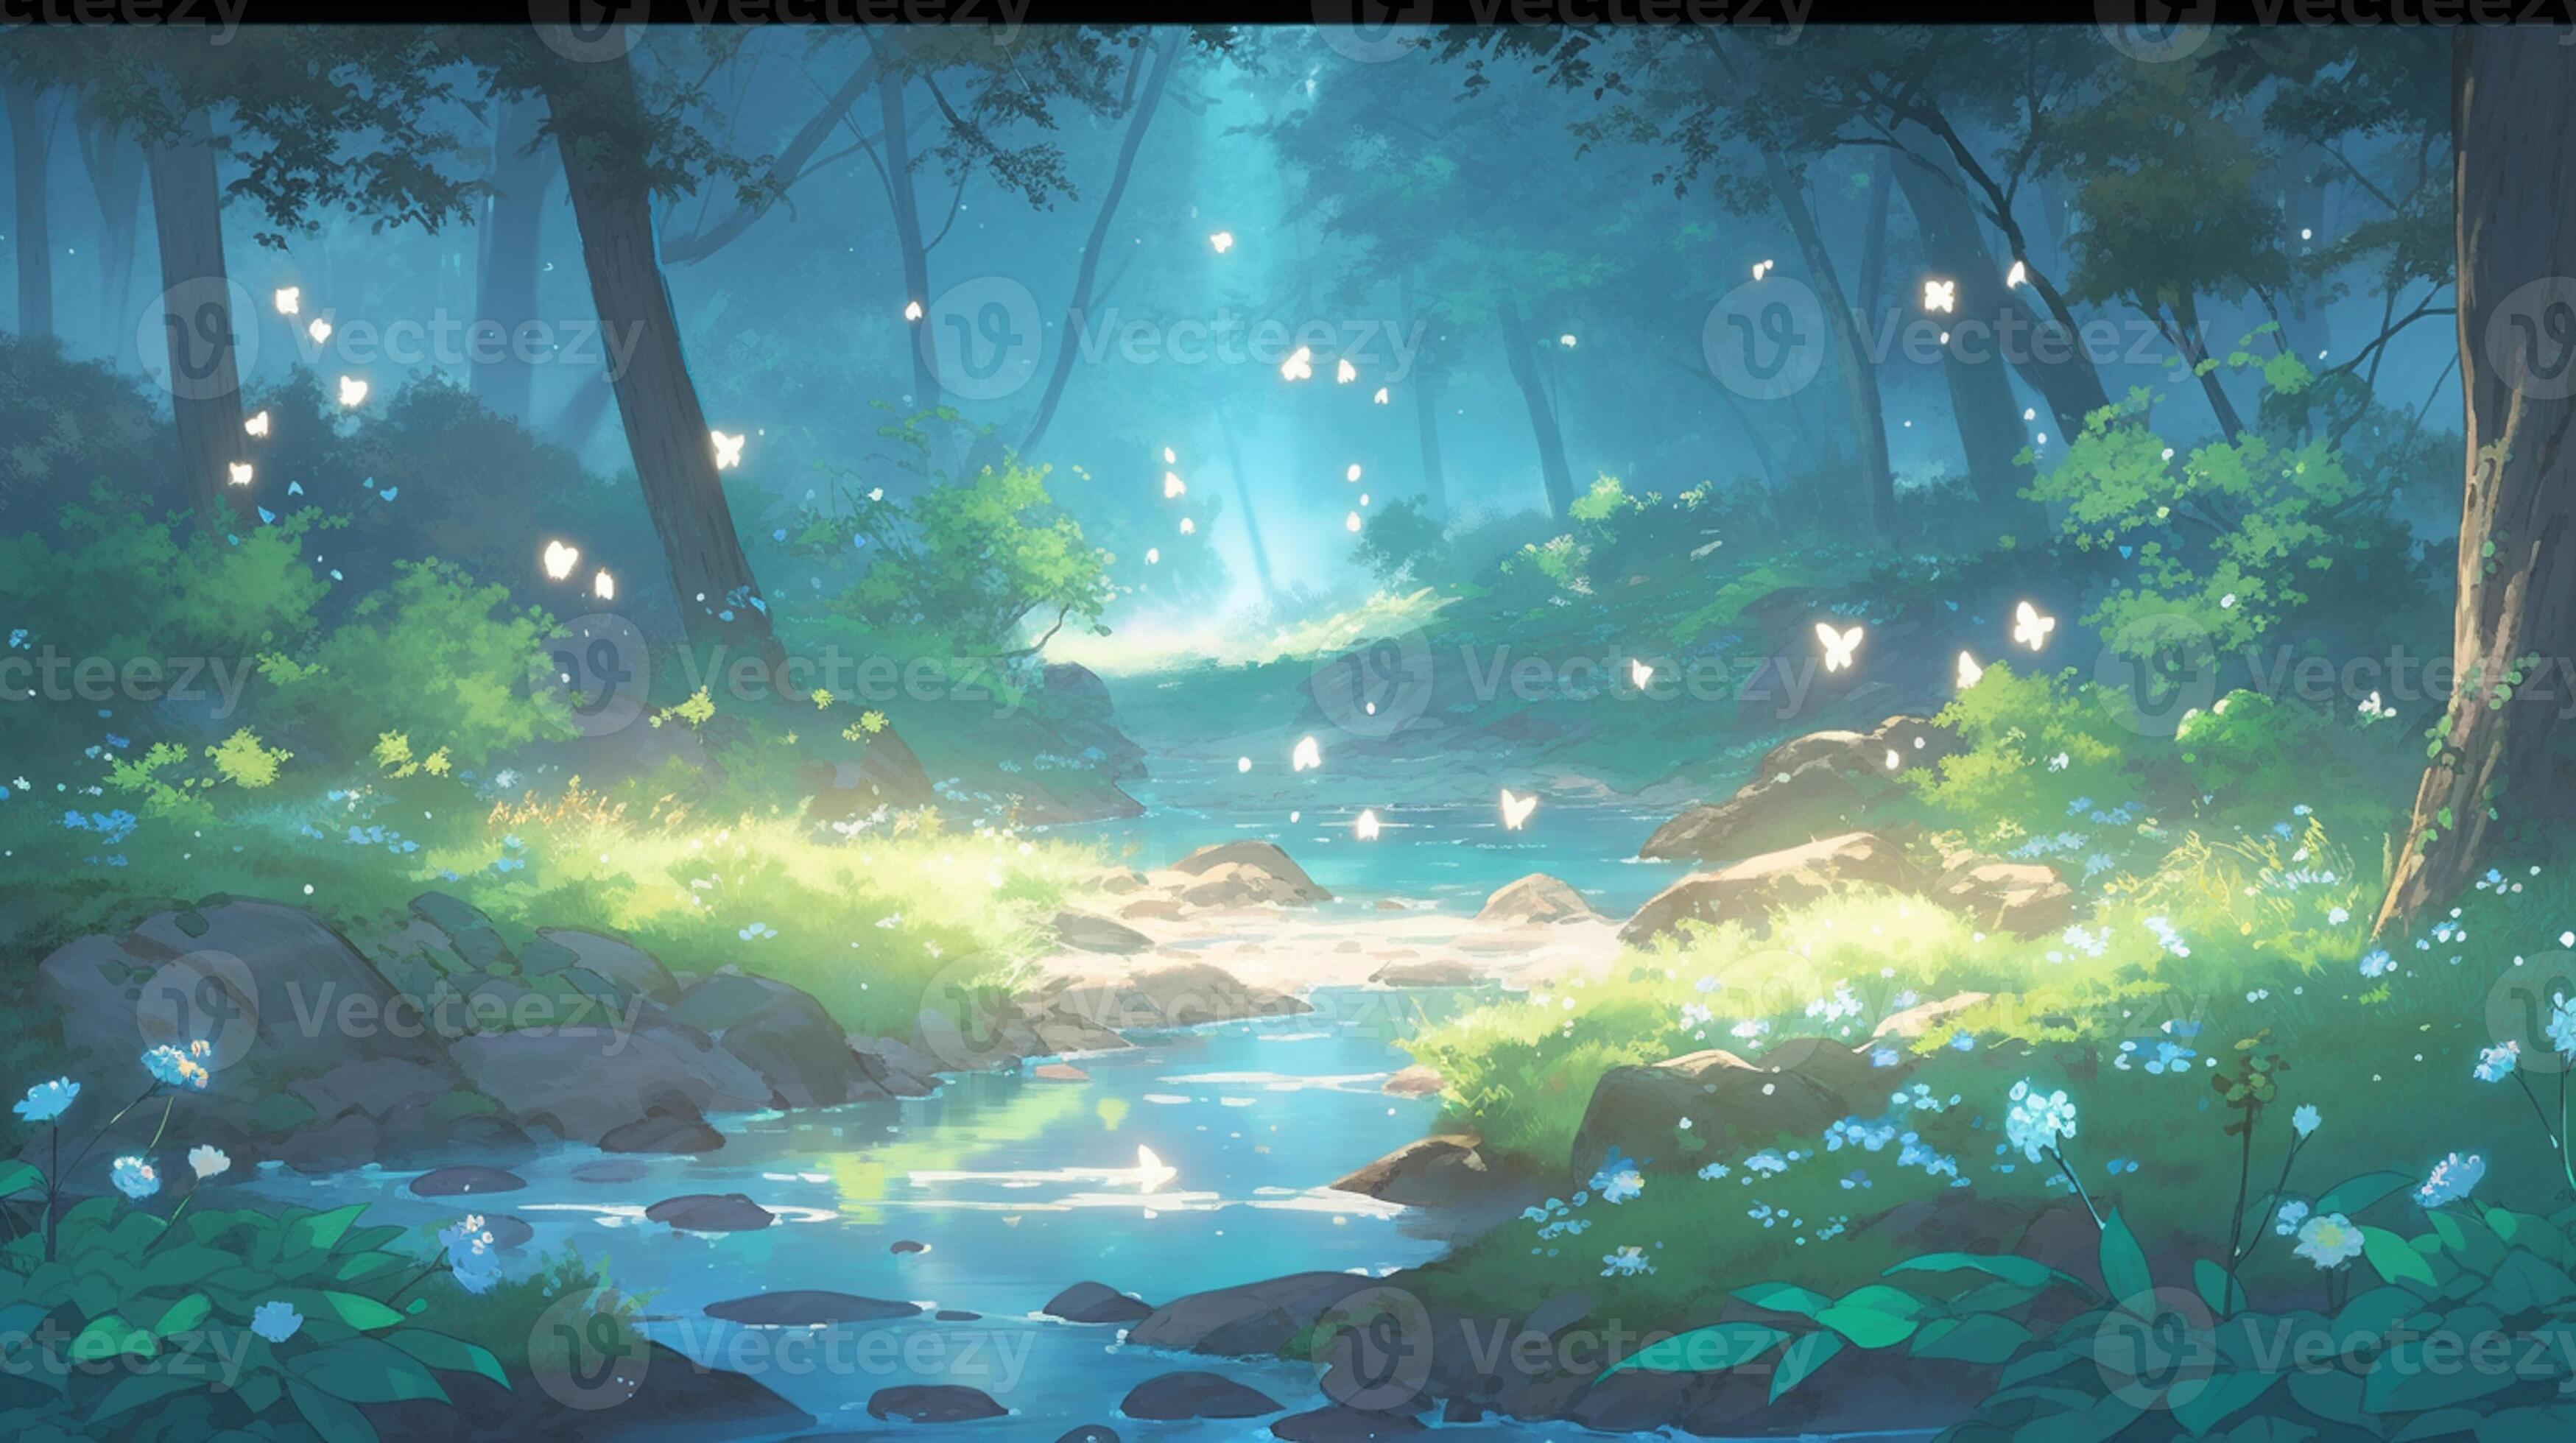 Papel de parede HD para desktop: Anime, Flor, Floresta, Original